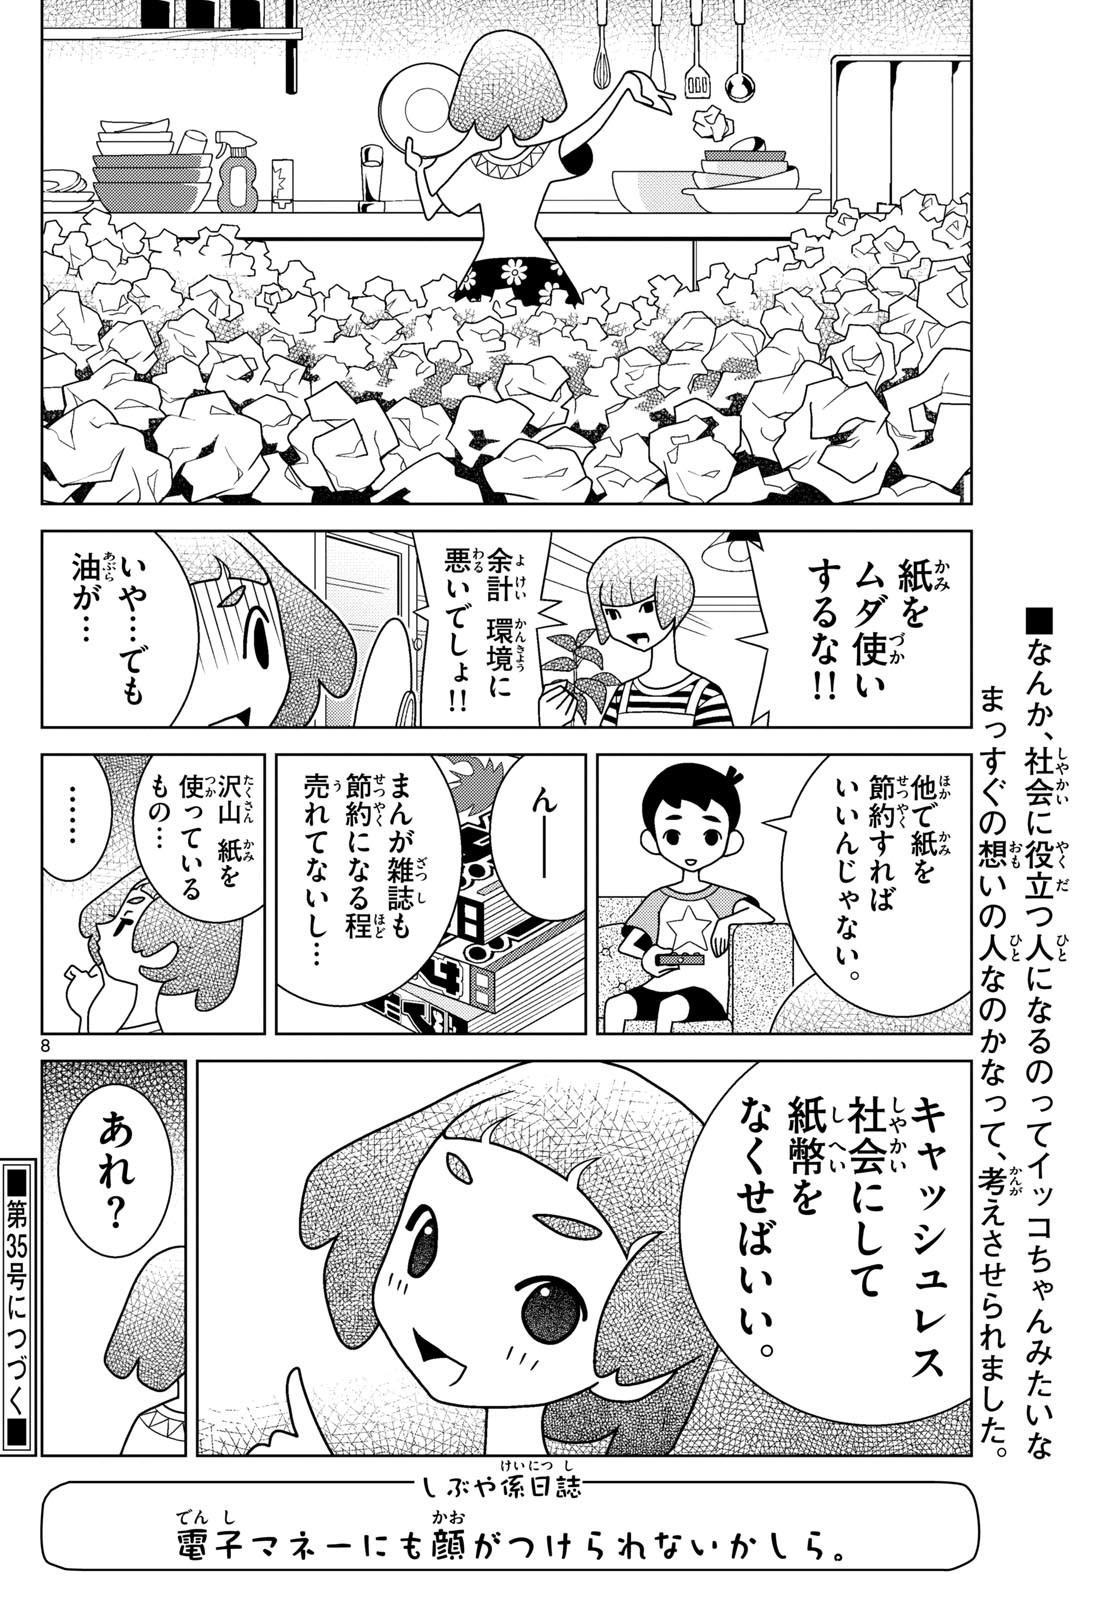 Shibuya Near Family - Chapter 101 - Page 8